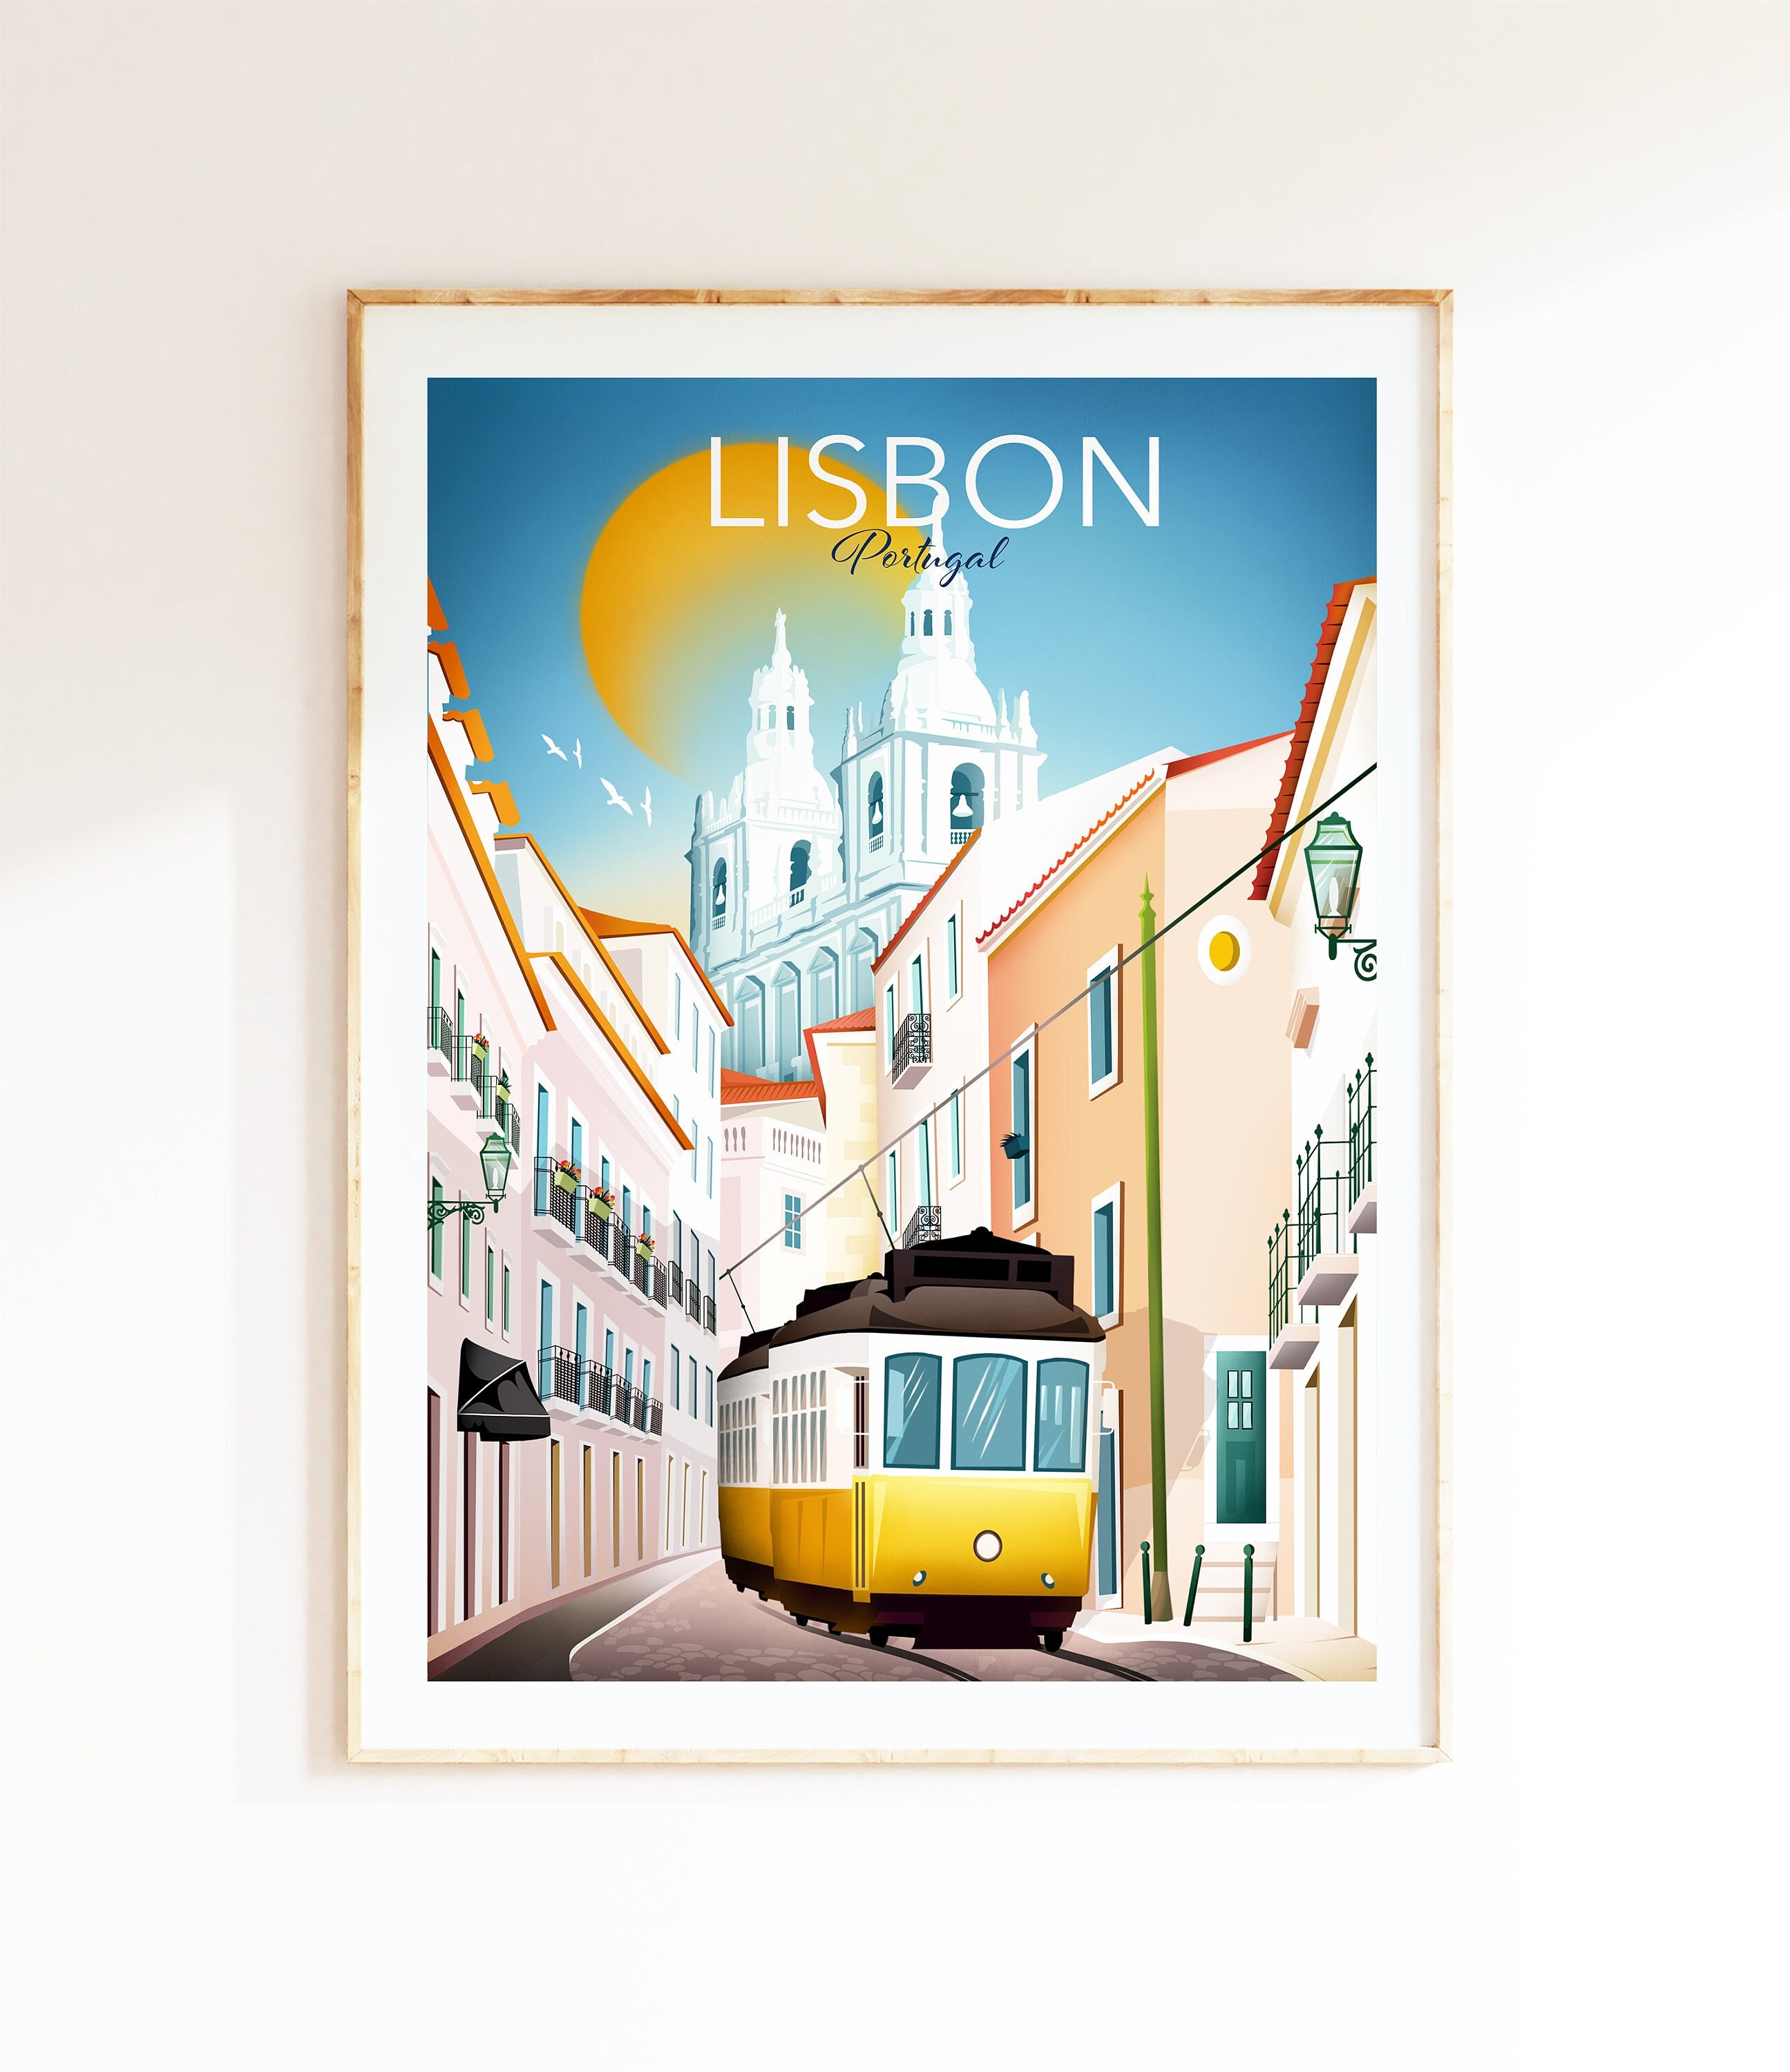 Ben 10 Action Figures for sale in Lisbon, Portugal